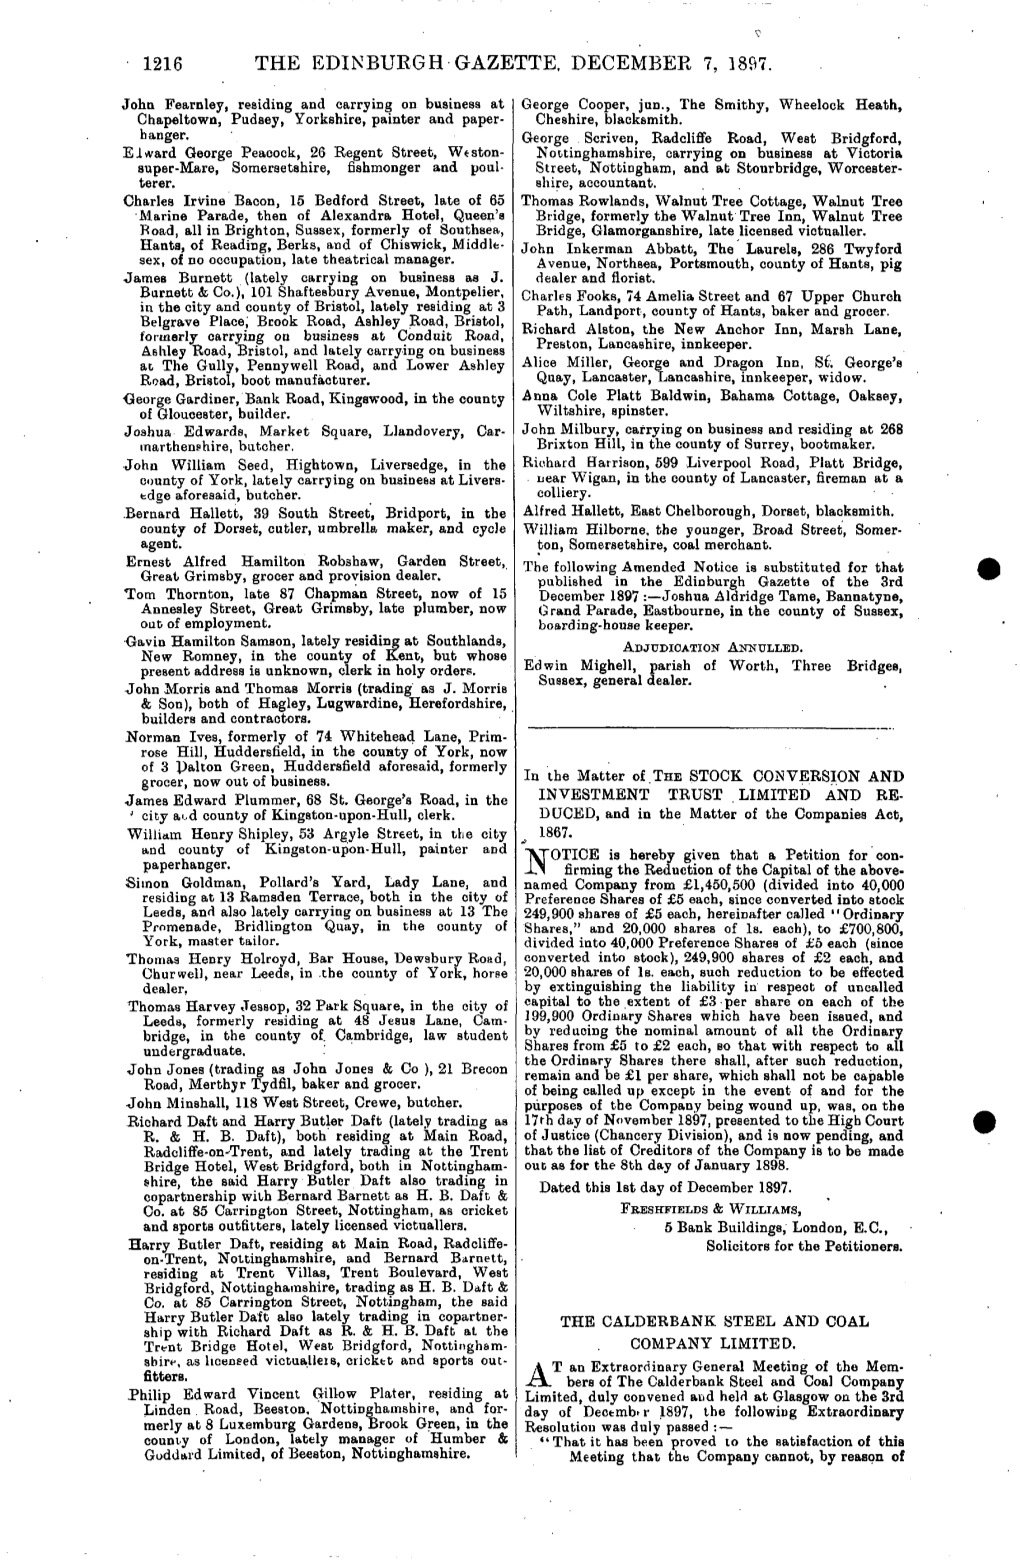 1216 the Edinburgh Gazette, December 7, 1897